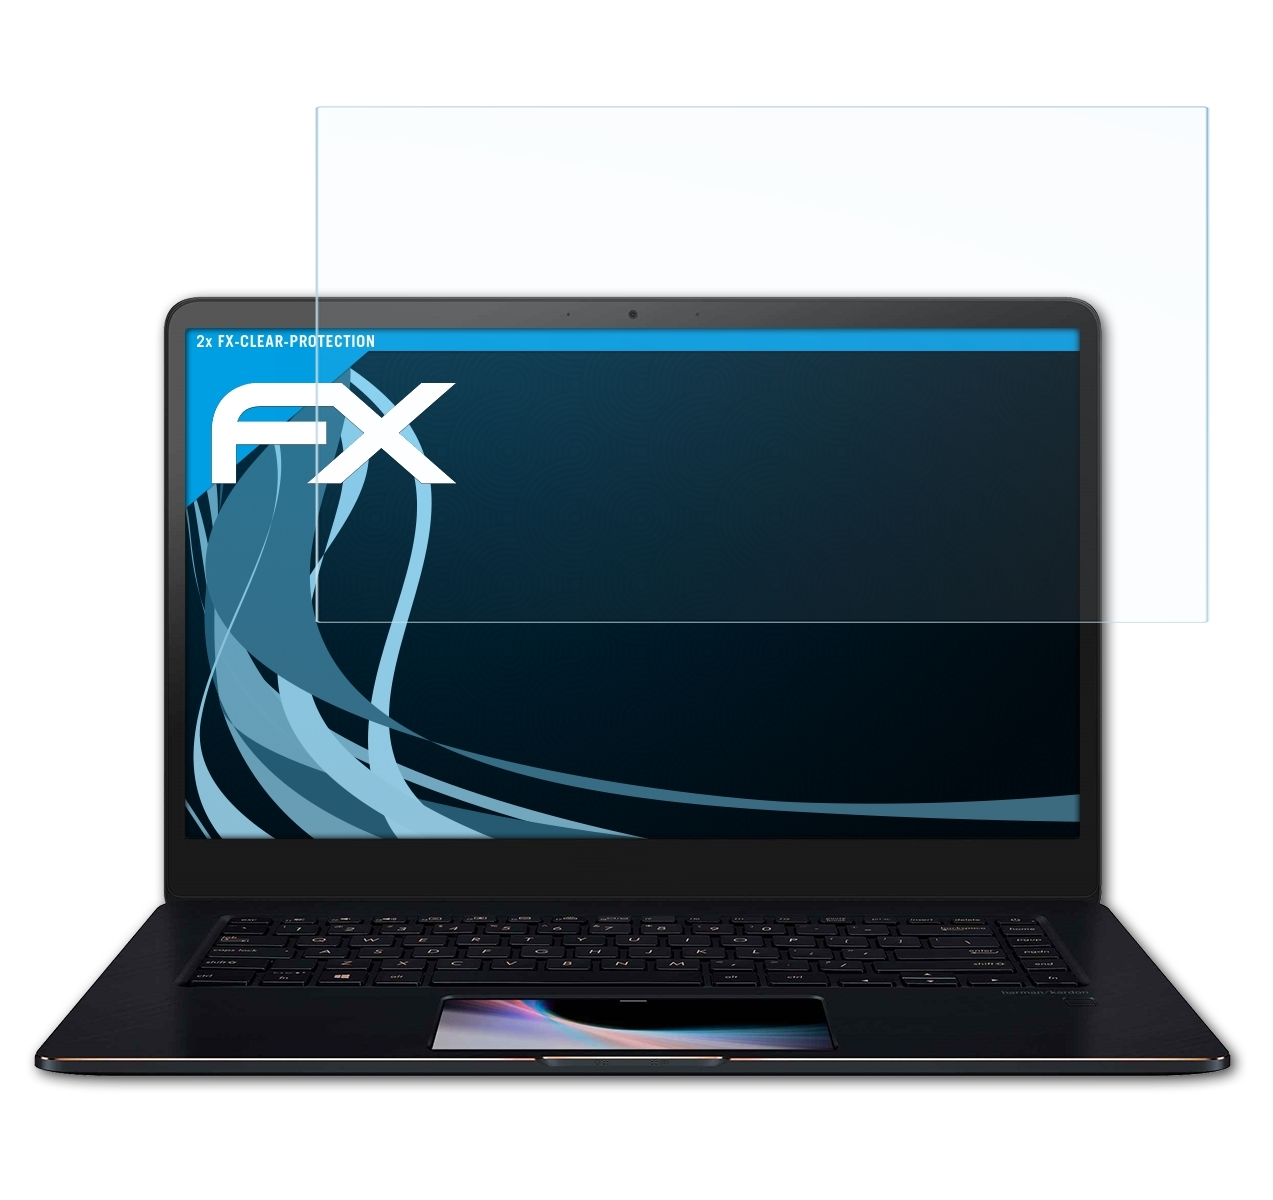 2x (UX550GD)) 15 ZenBook Displayschutz(für ATFOLIX Pro Asus FX-Clear